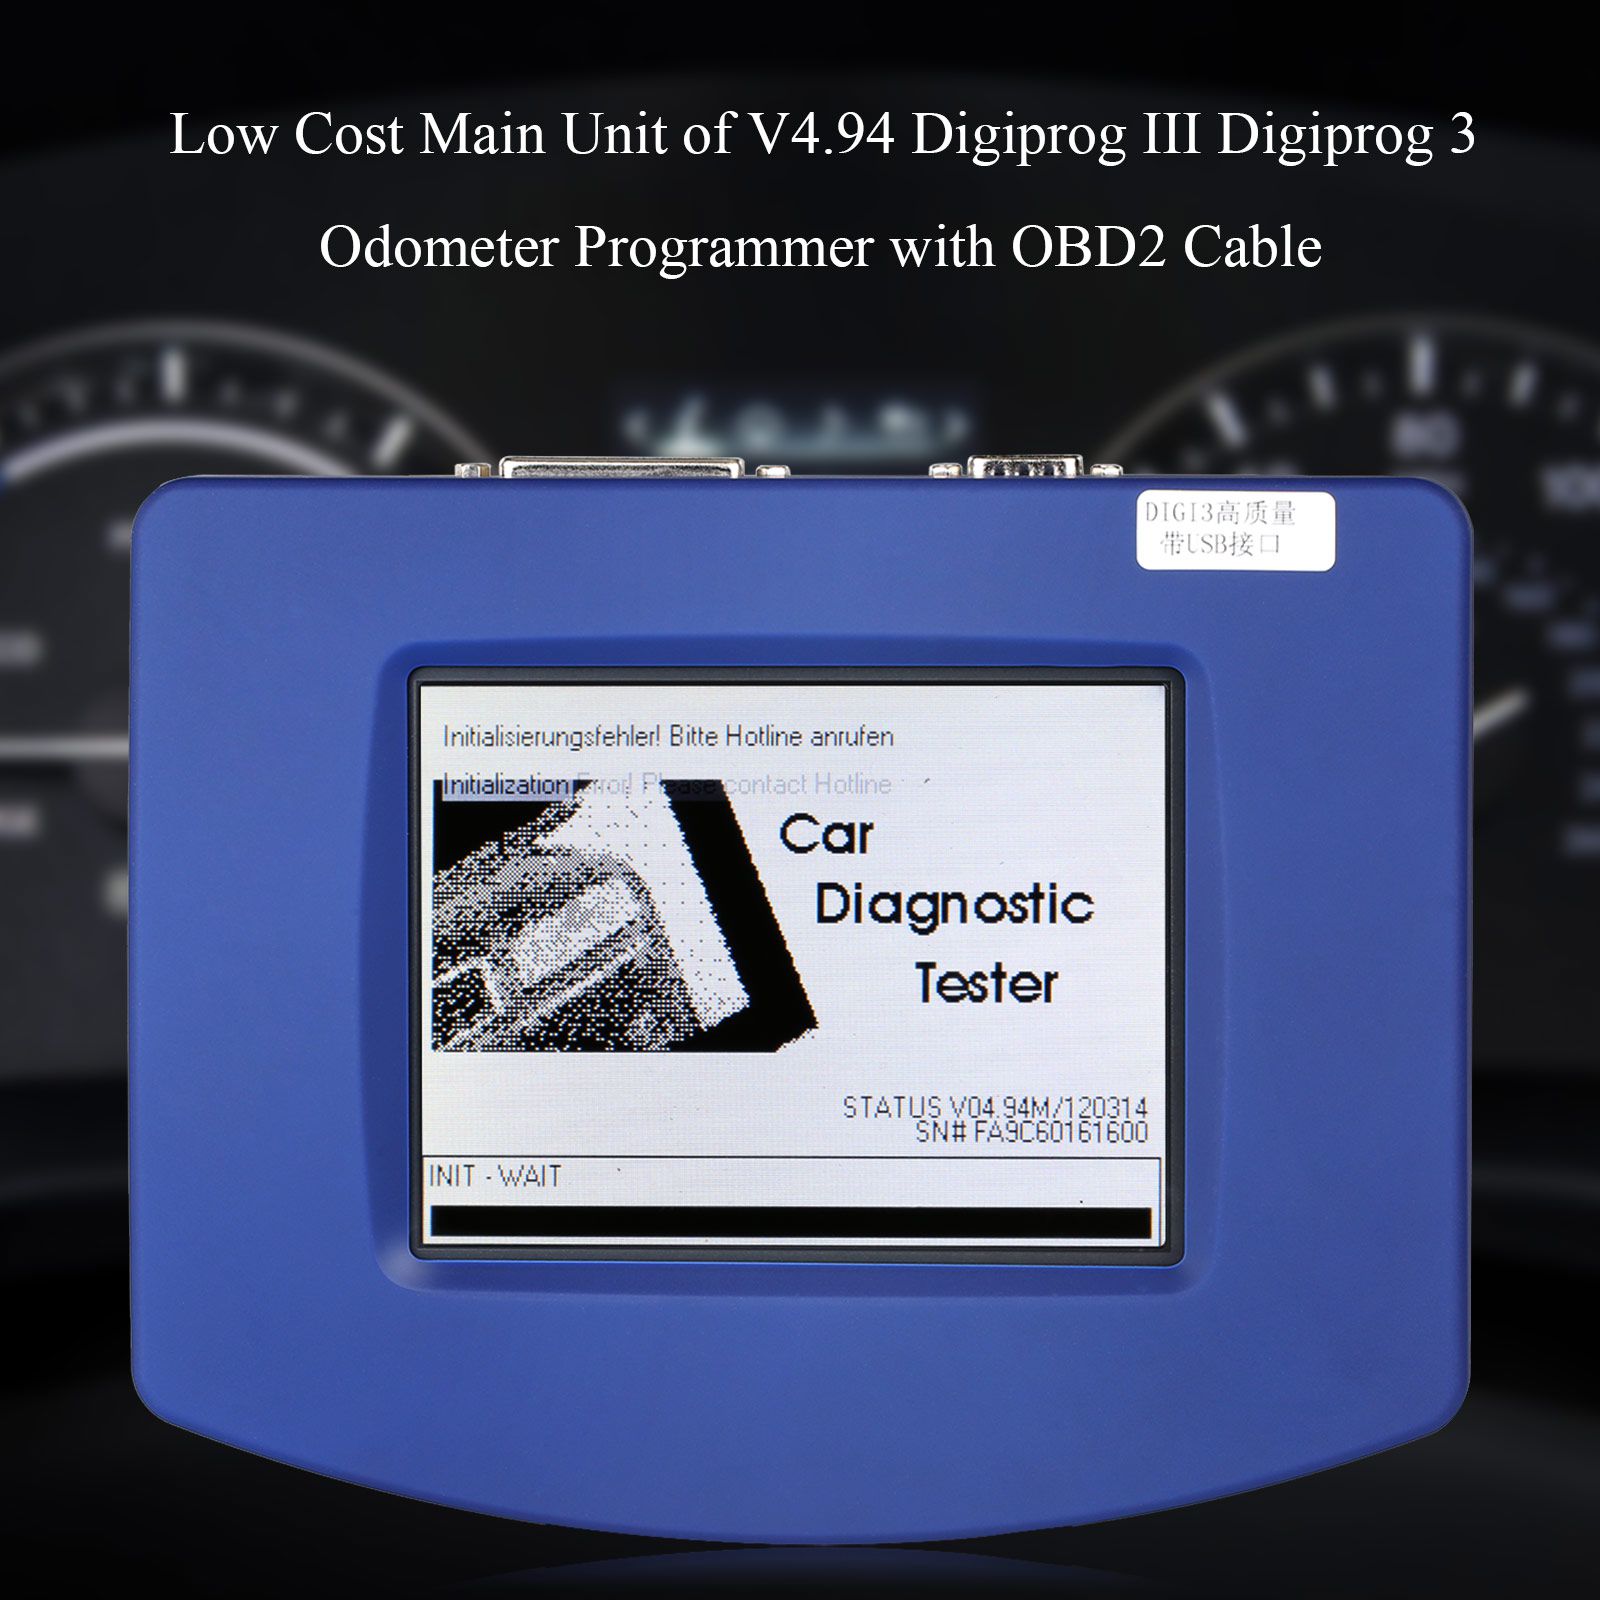 Host de bajo coste del Odómetro v4.94 digiprog III digiprog3 con cable obd2 st01 st04